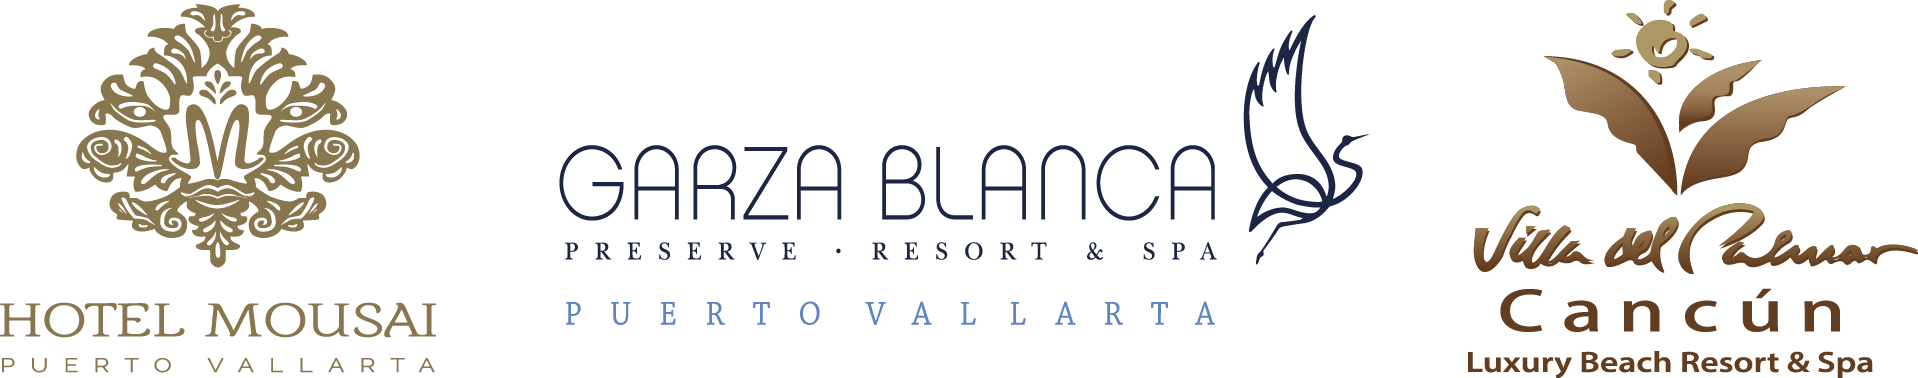 Referral Resorts Puerto Vallarta & Cancun